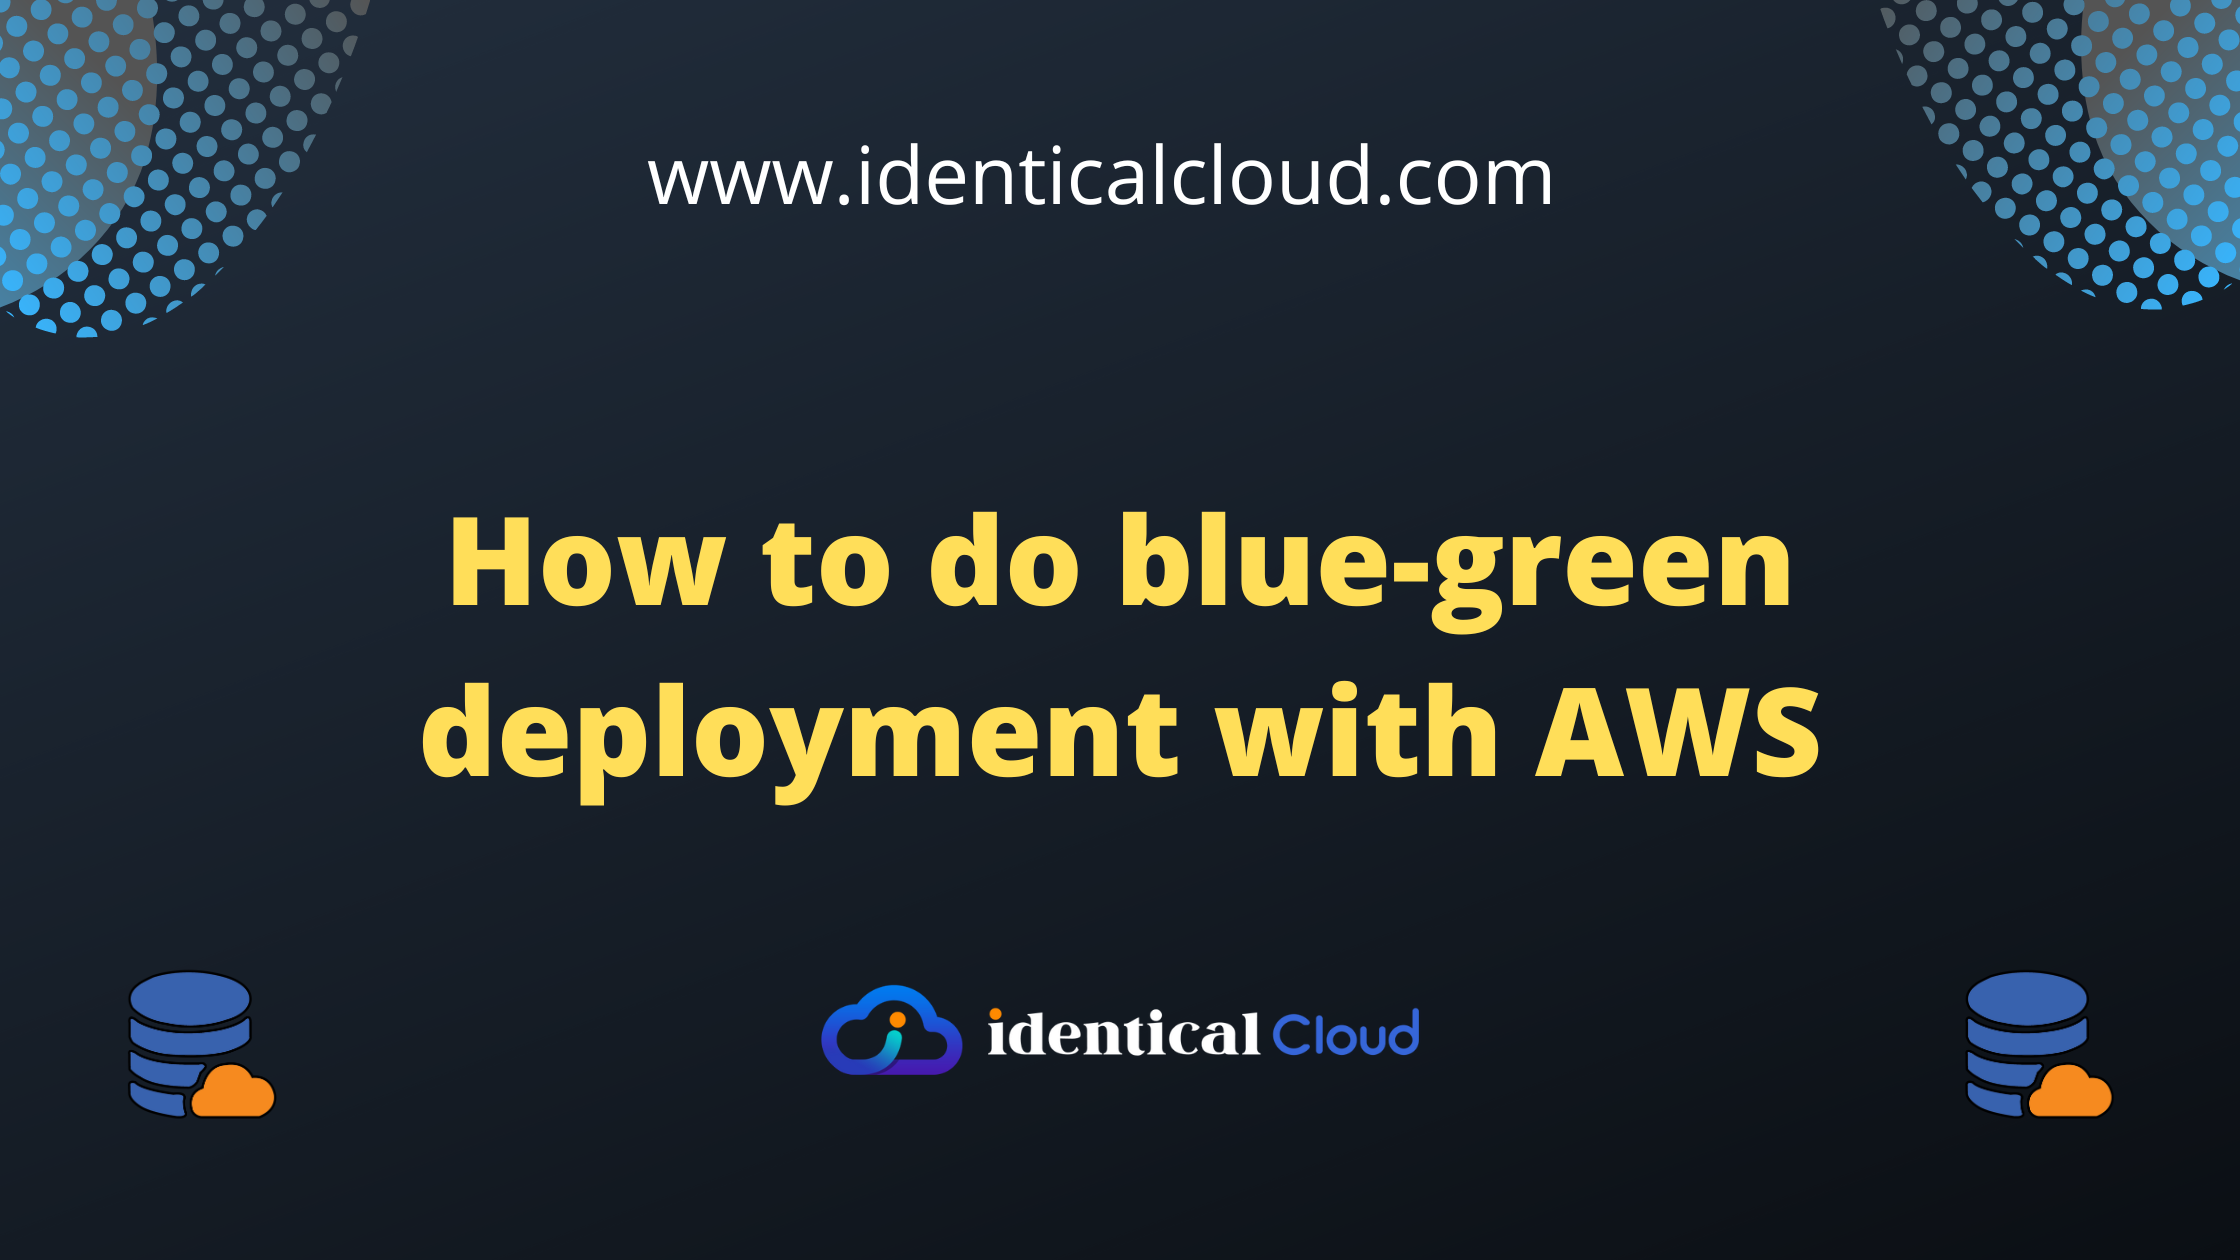 How to do blue-green deployment with AWS - identicalcloud.com